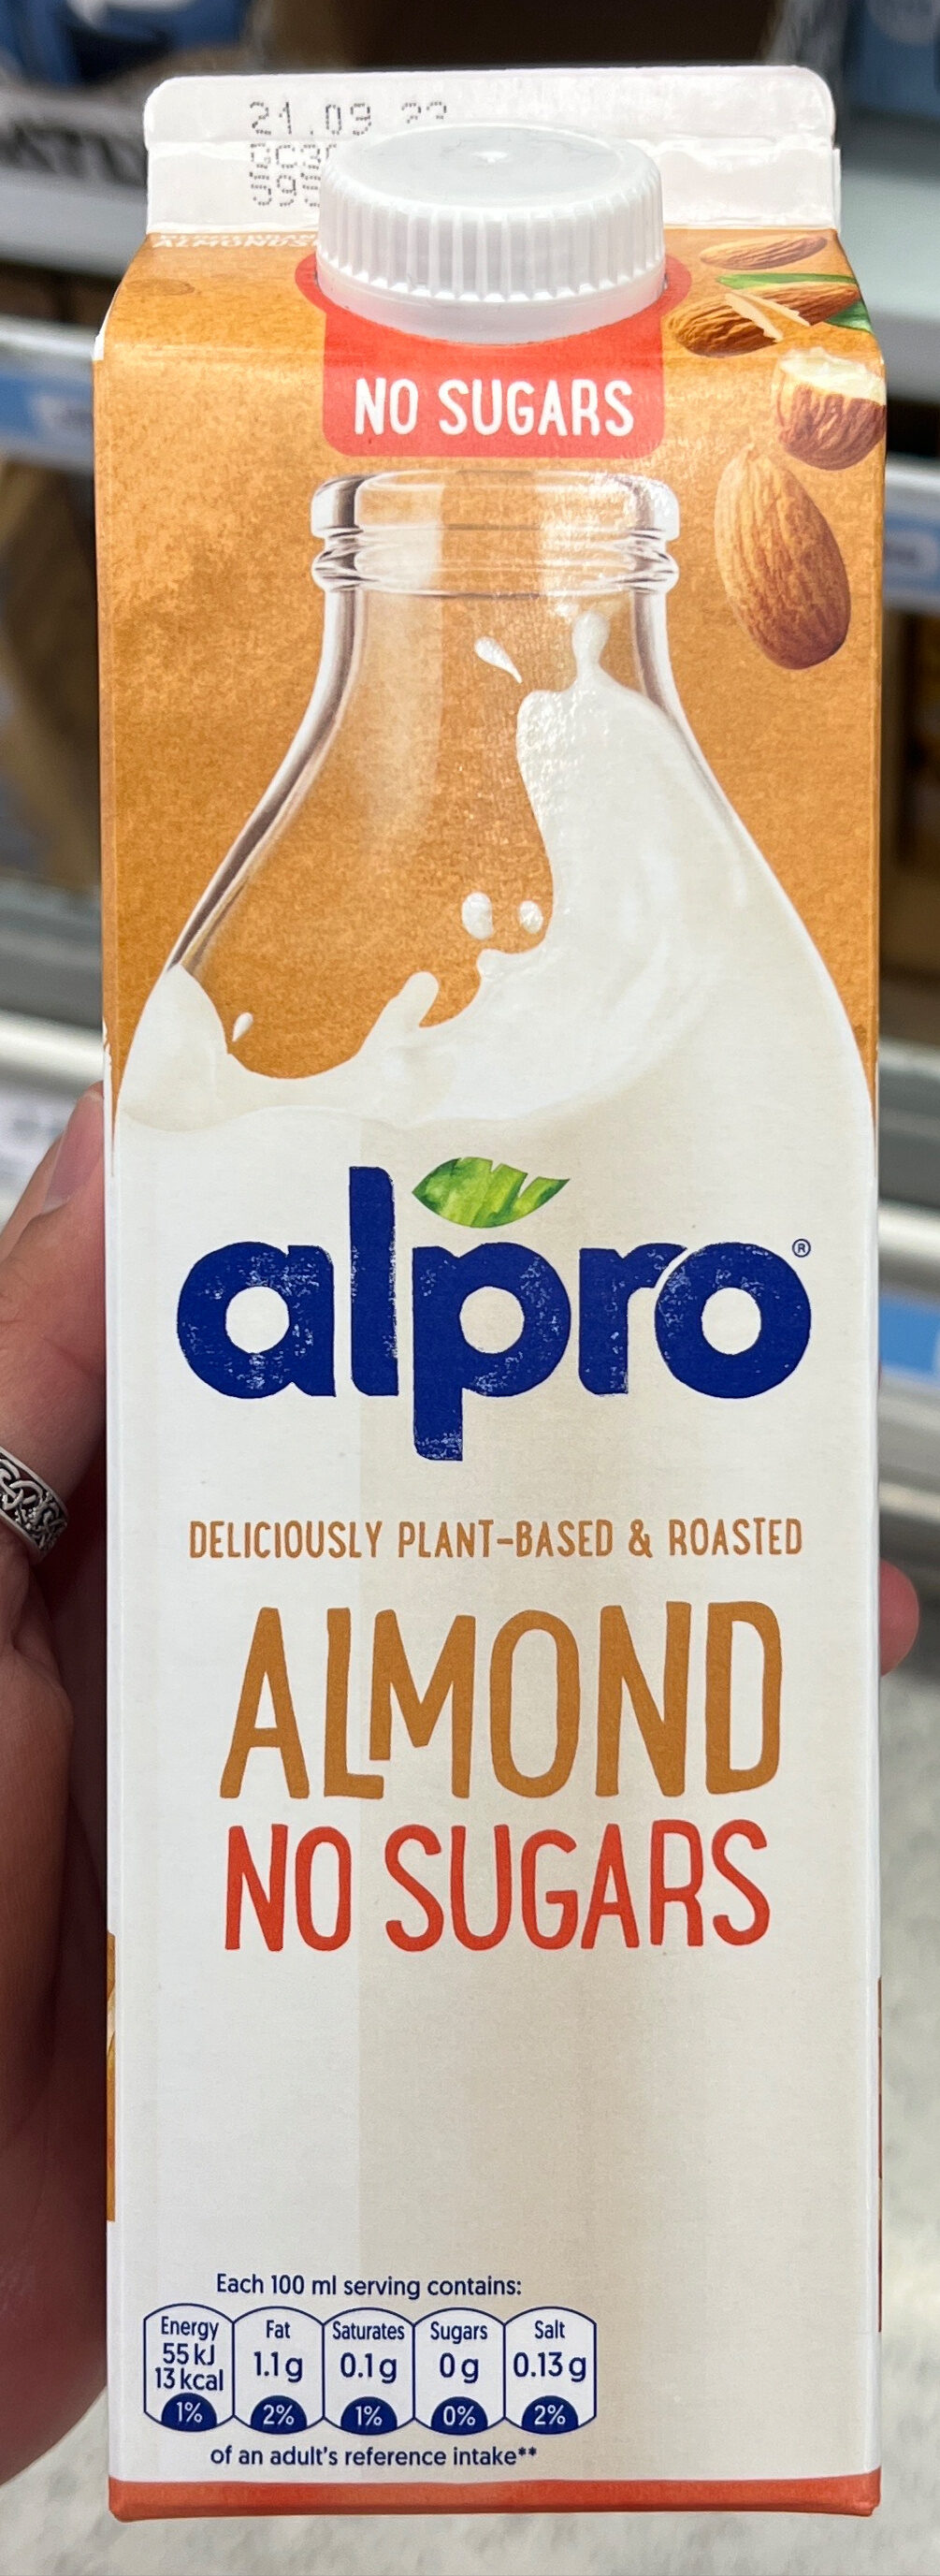 Almond Unsweetened - Product